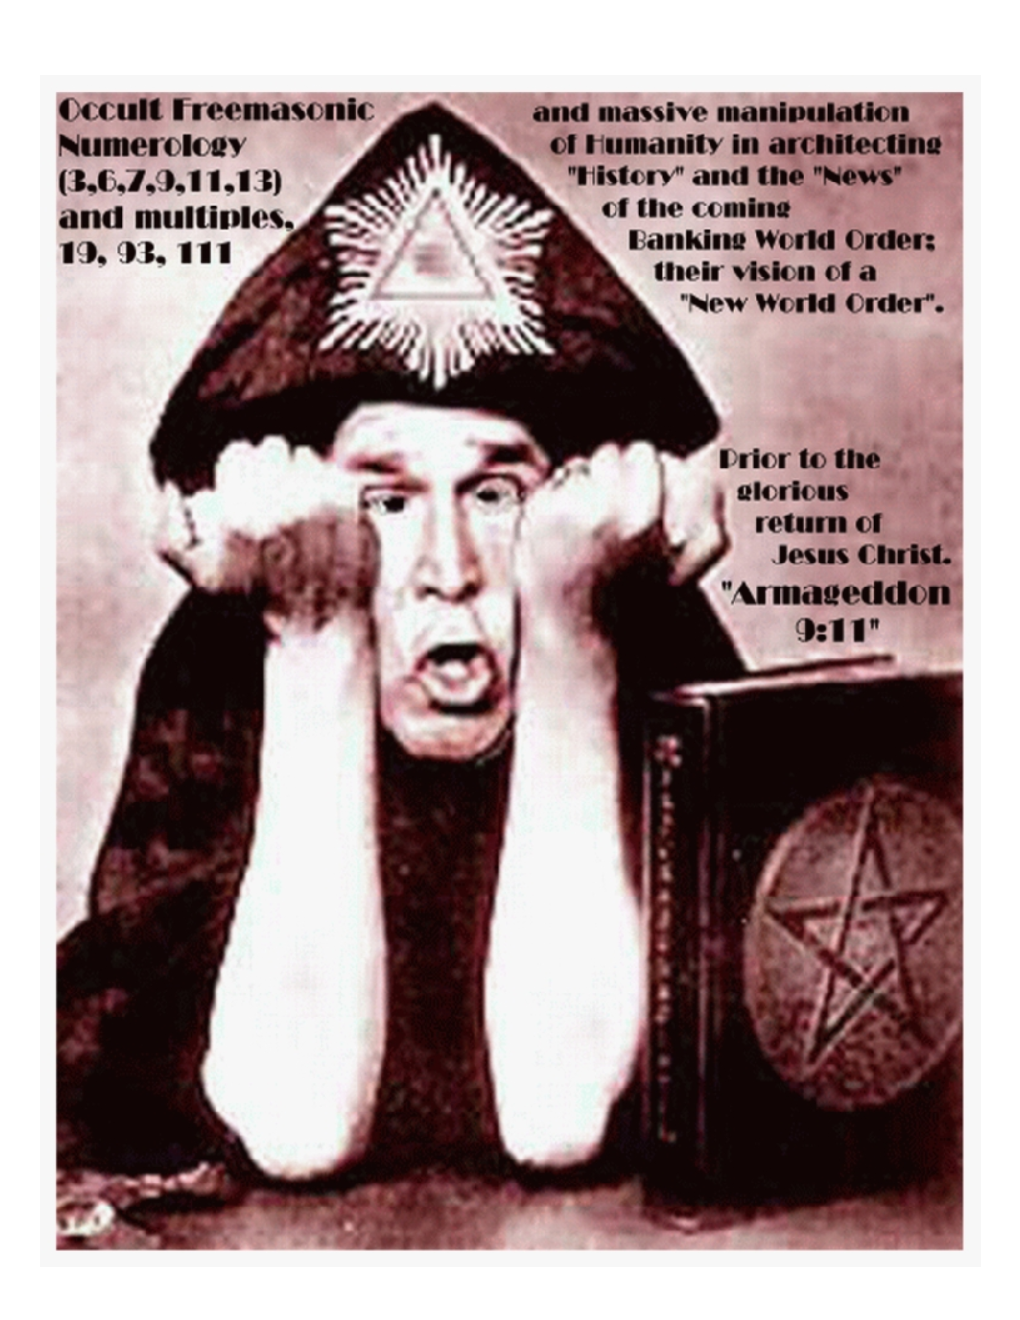 The Devilish Illuminati World Bankers!